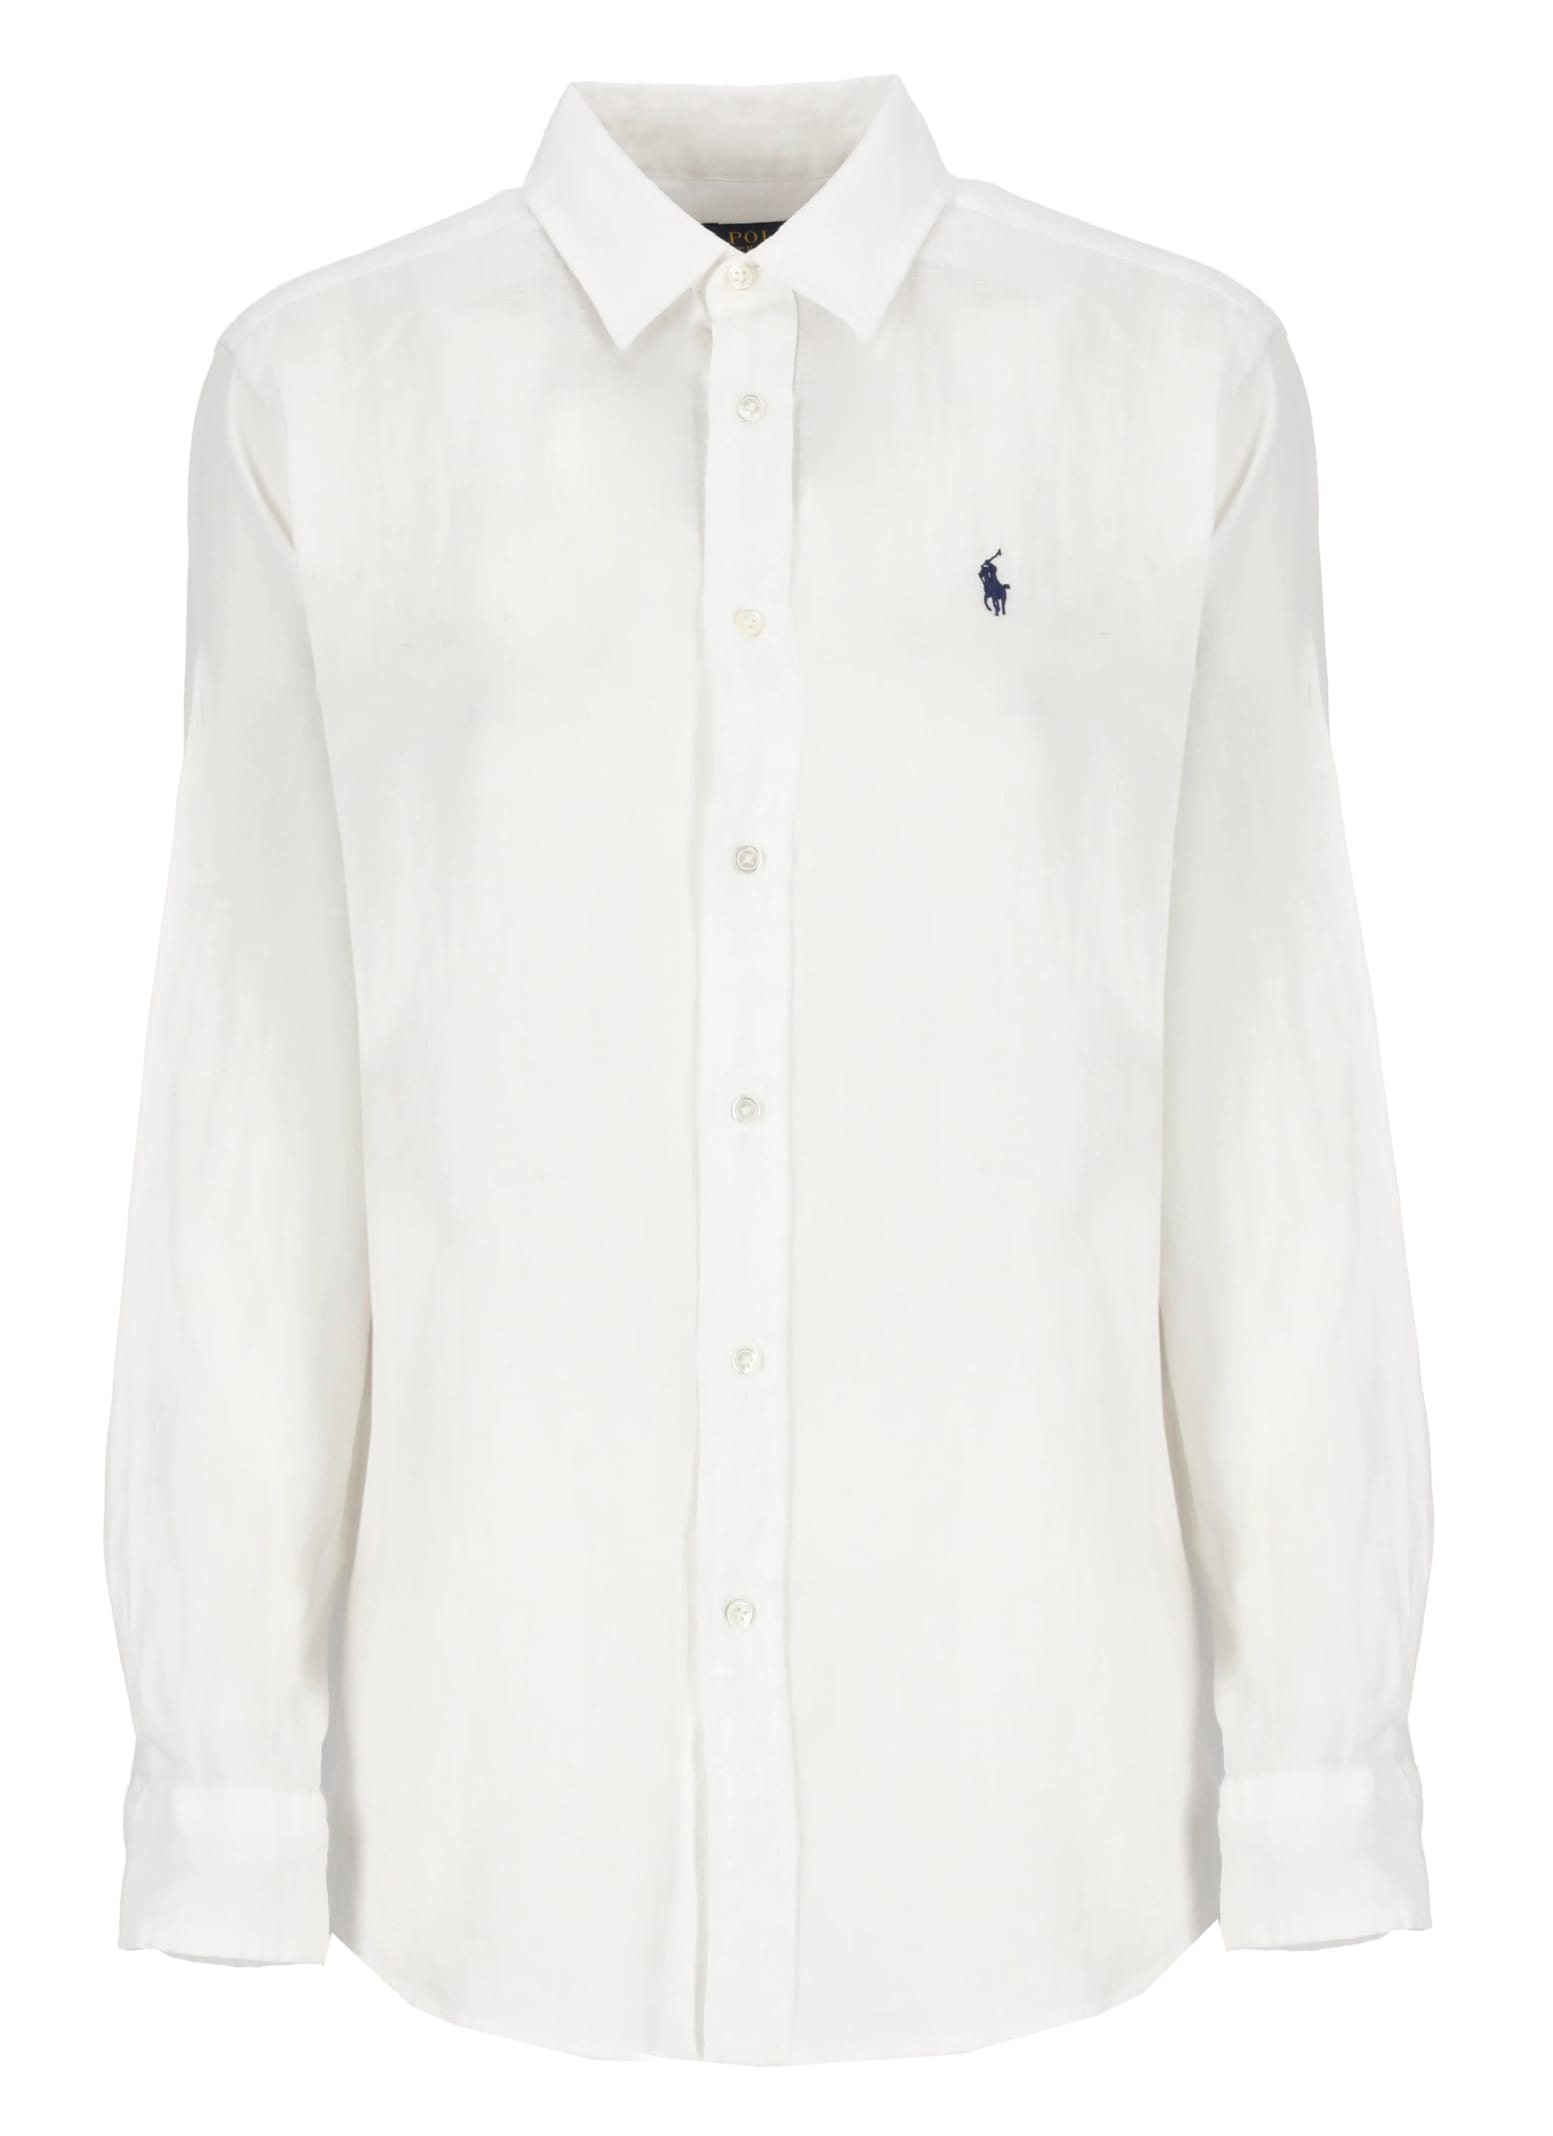 Ralph Lauren Shirt With Pony In White